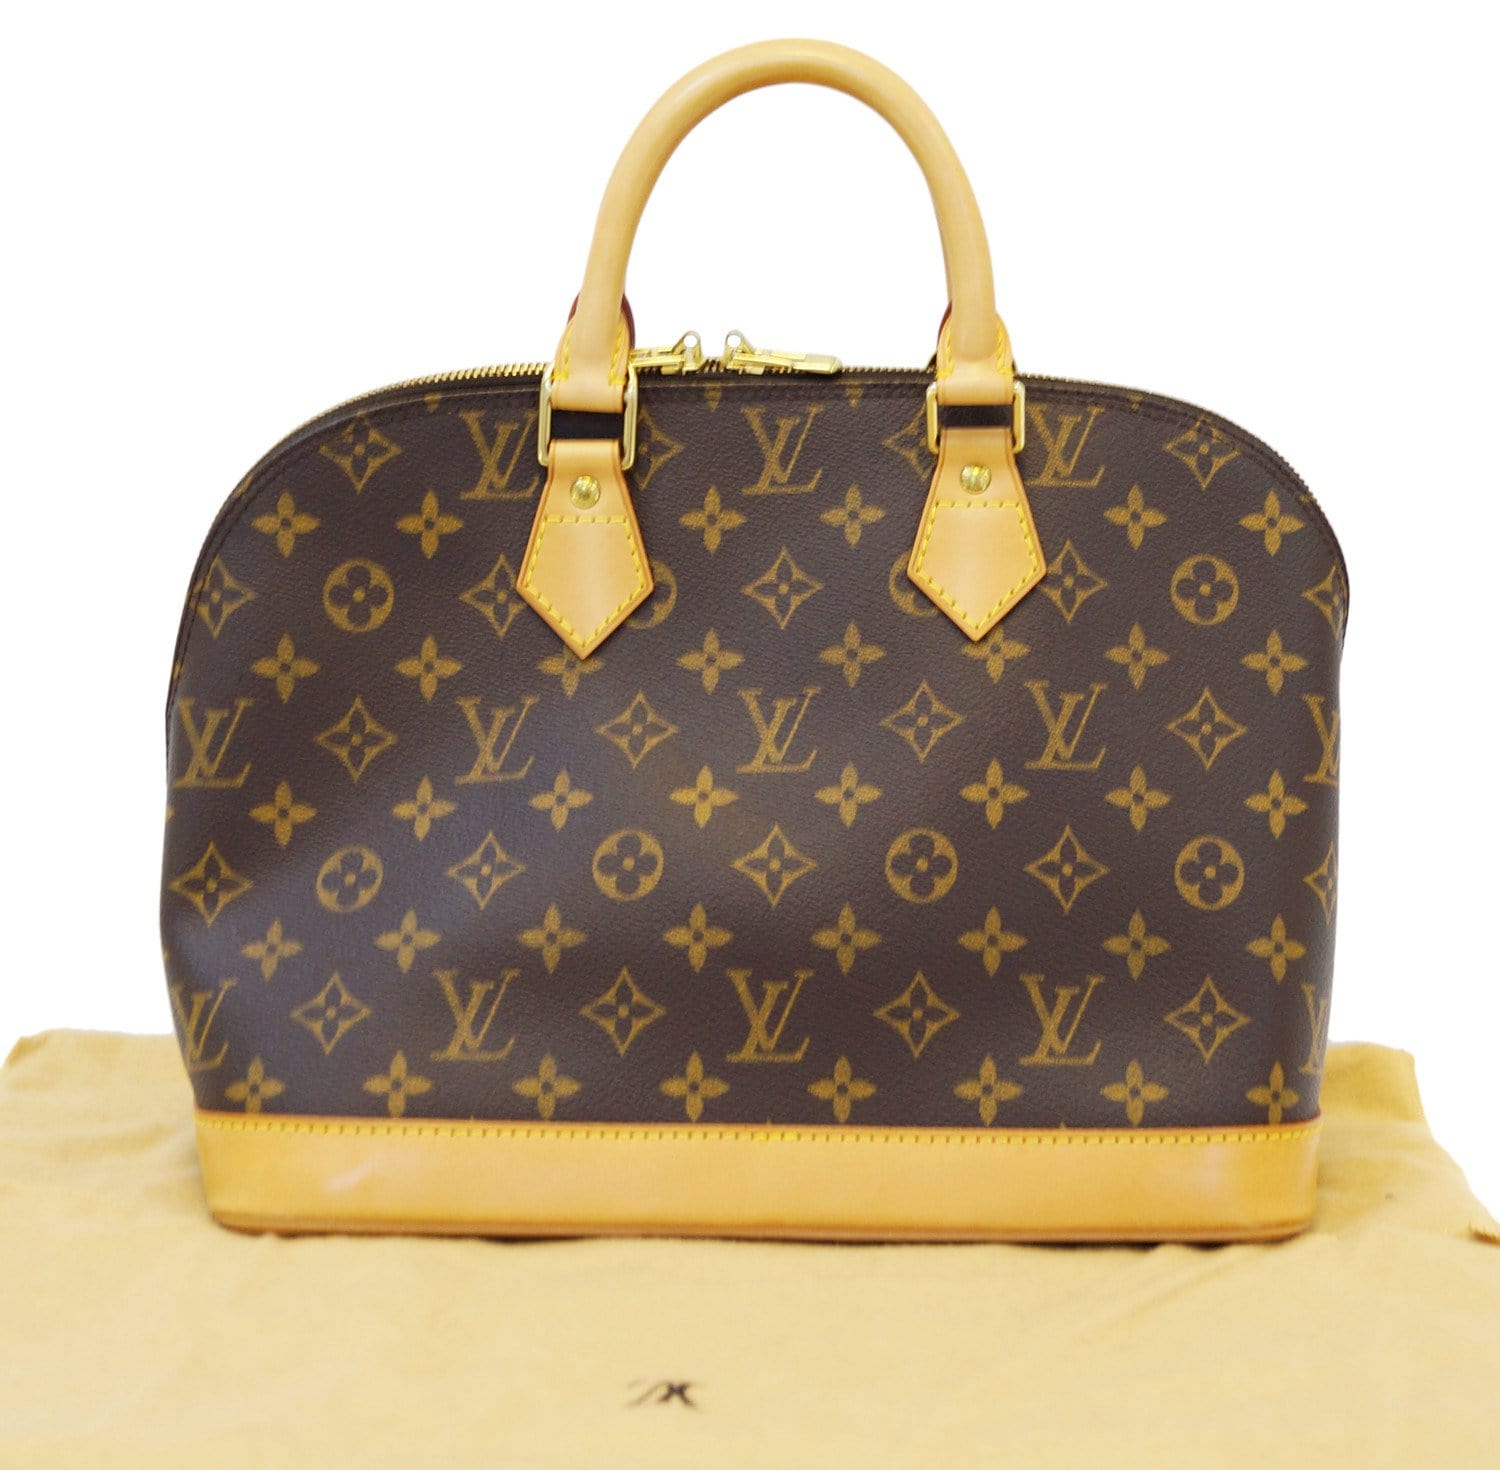 Louis Vuitton Diane NM Handbag Monogram Canvas Brown 2015071